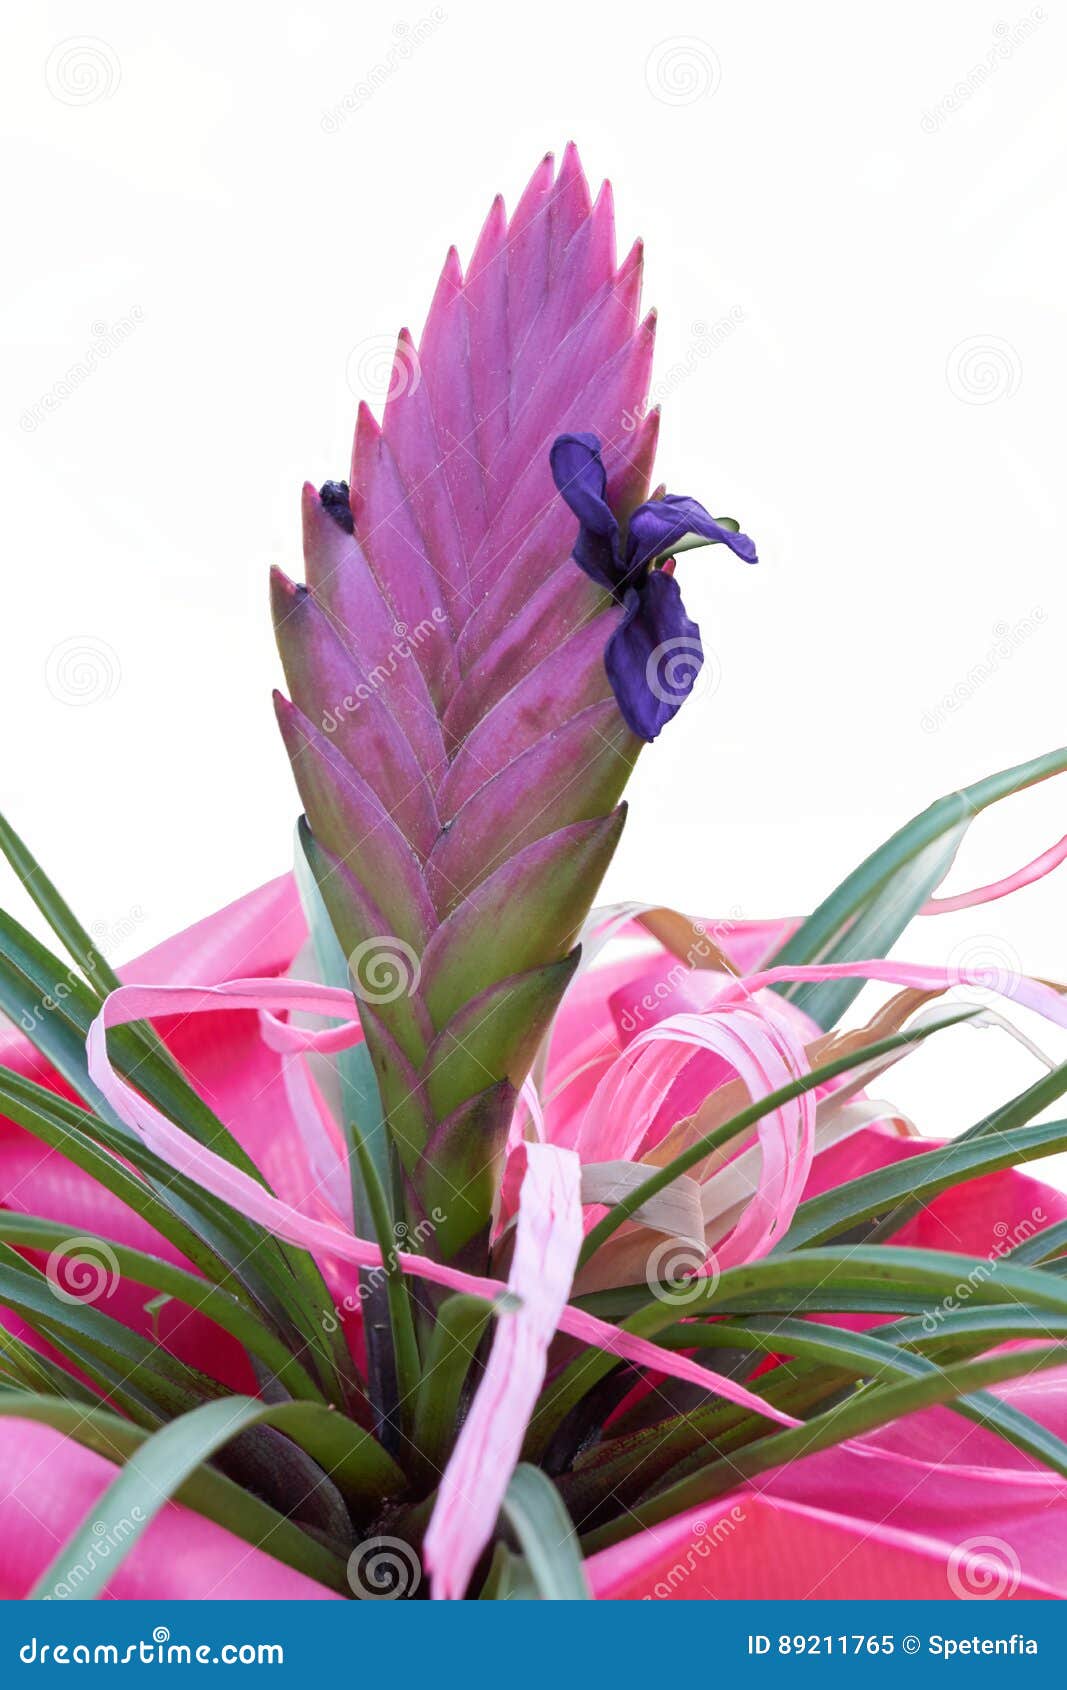 Vriesea Carinata Flower in the Vase Stock Image - Image of beautiful,  livingvase: 89211765